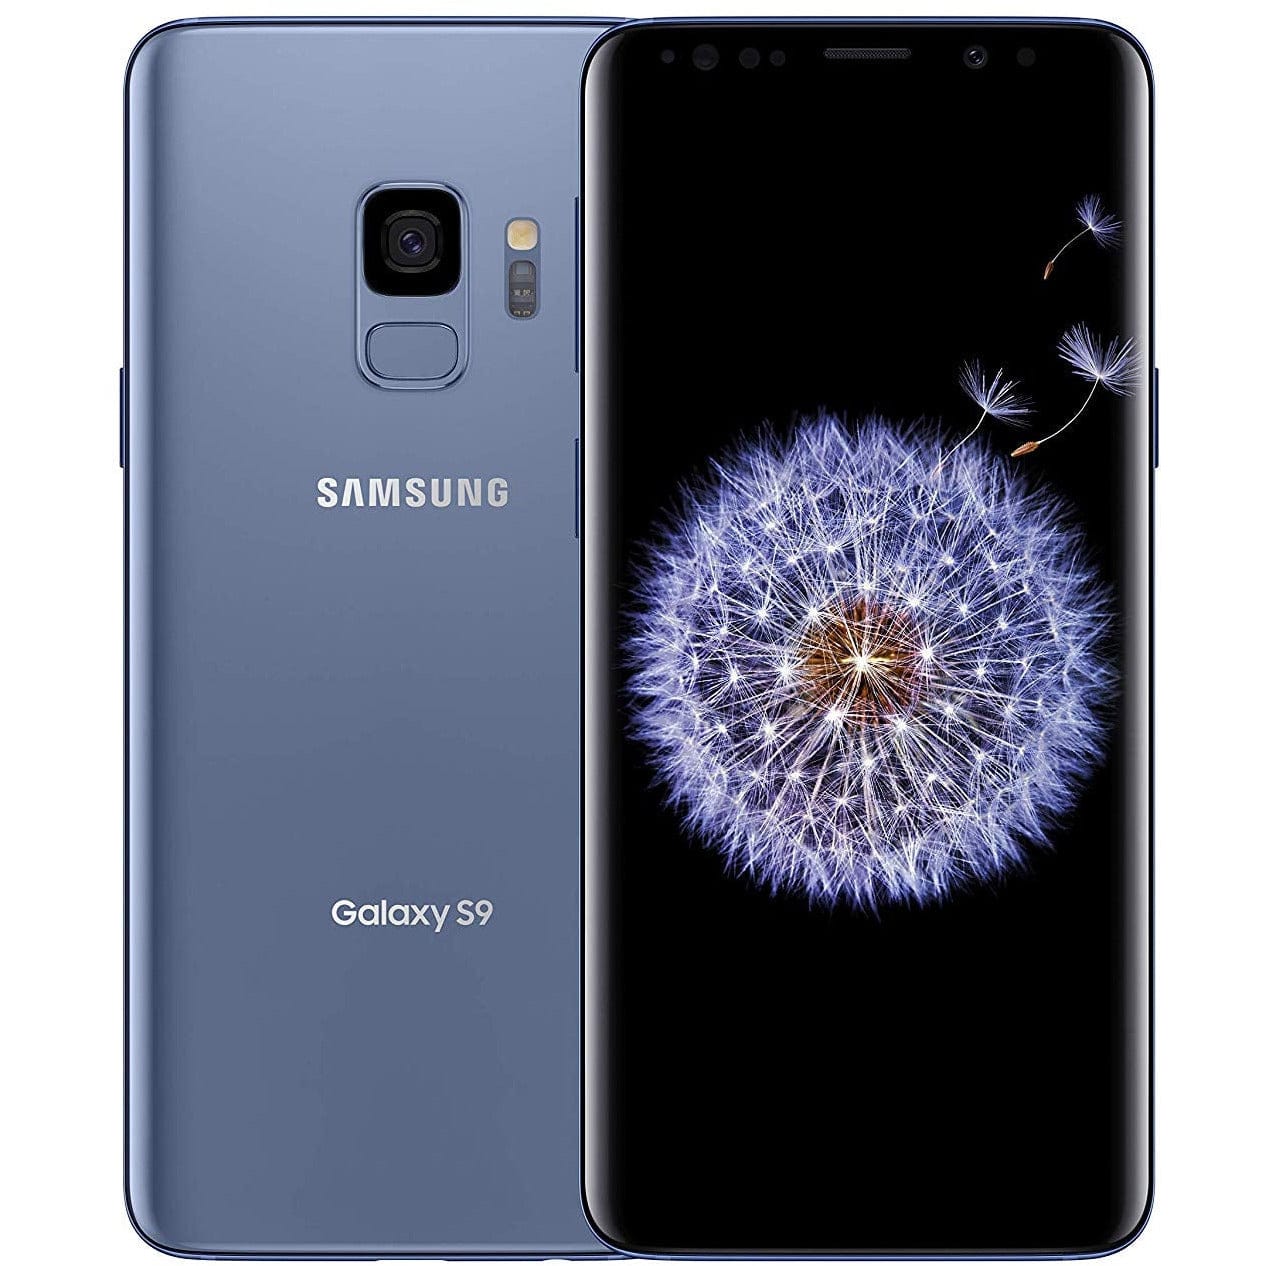 Samsung Galaxy S9 - 64 GB - Coral Blue - Unlocked - GSM